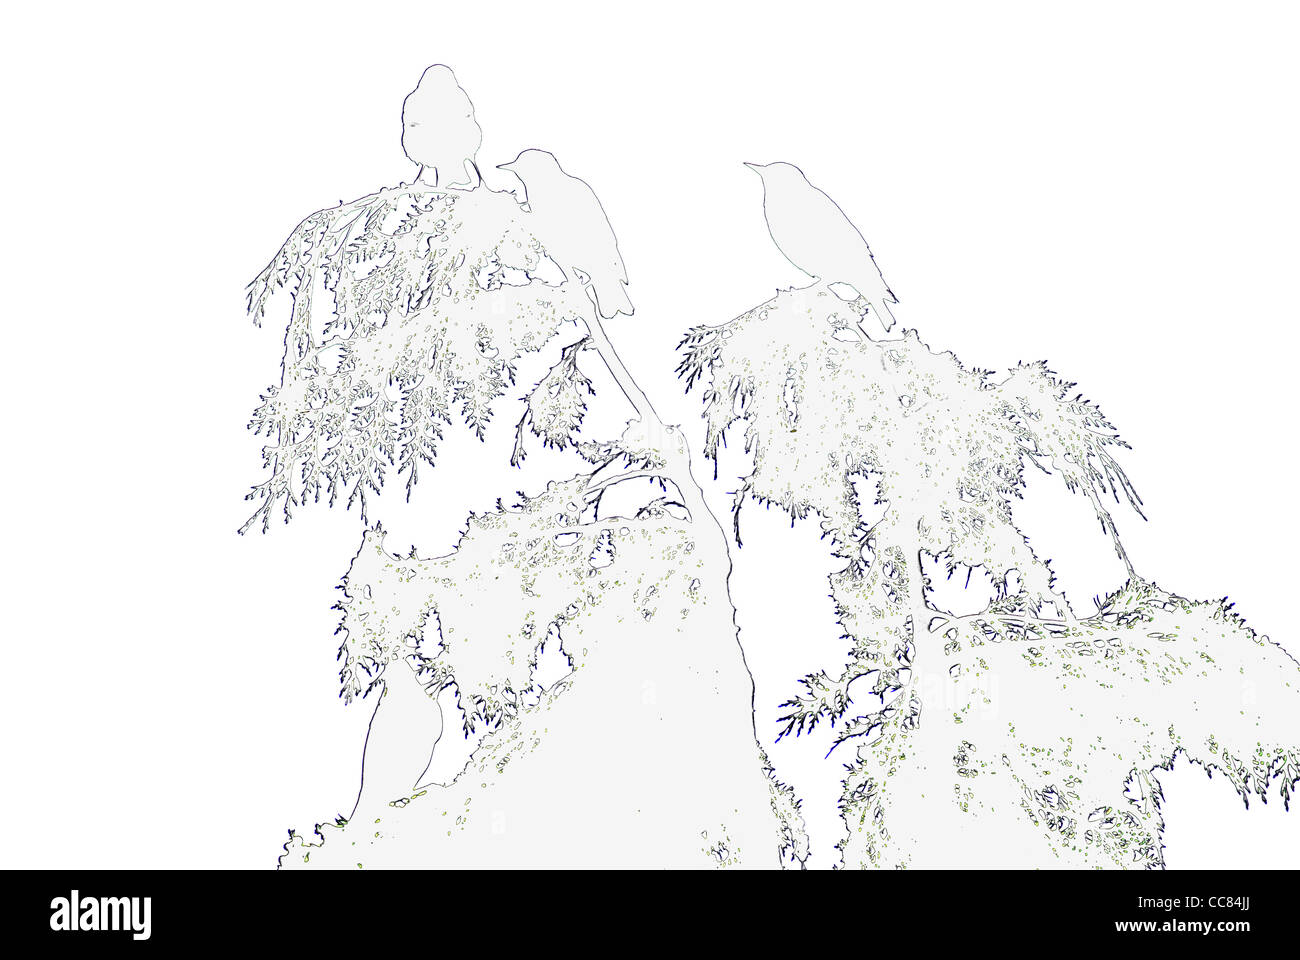 Starlings in Leylandii tree illustration style photo Stock Photo